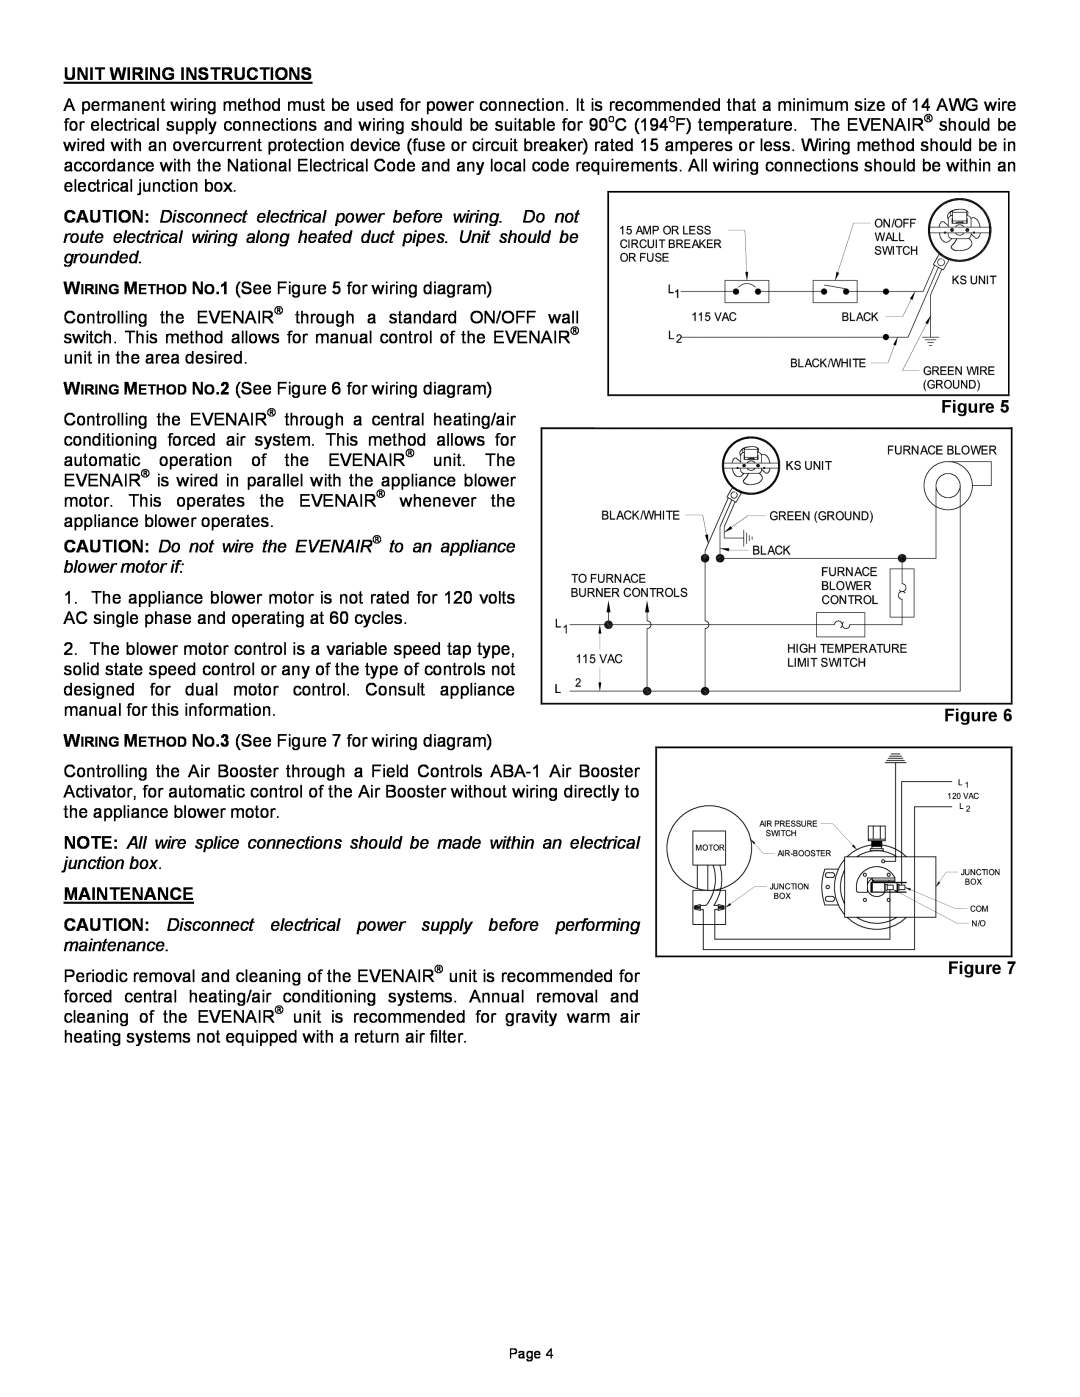 Field Controls TB26TB manual Unit Wiring Instructions, Maintenance, Figure Figure Figure 